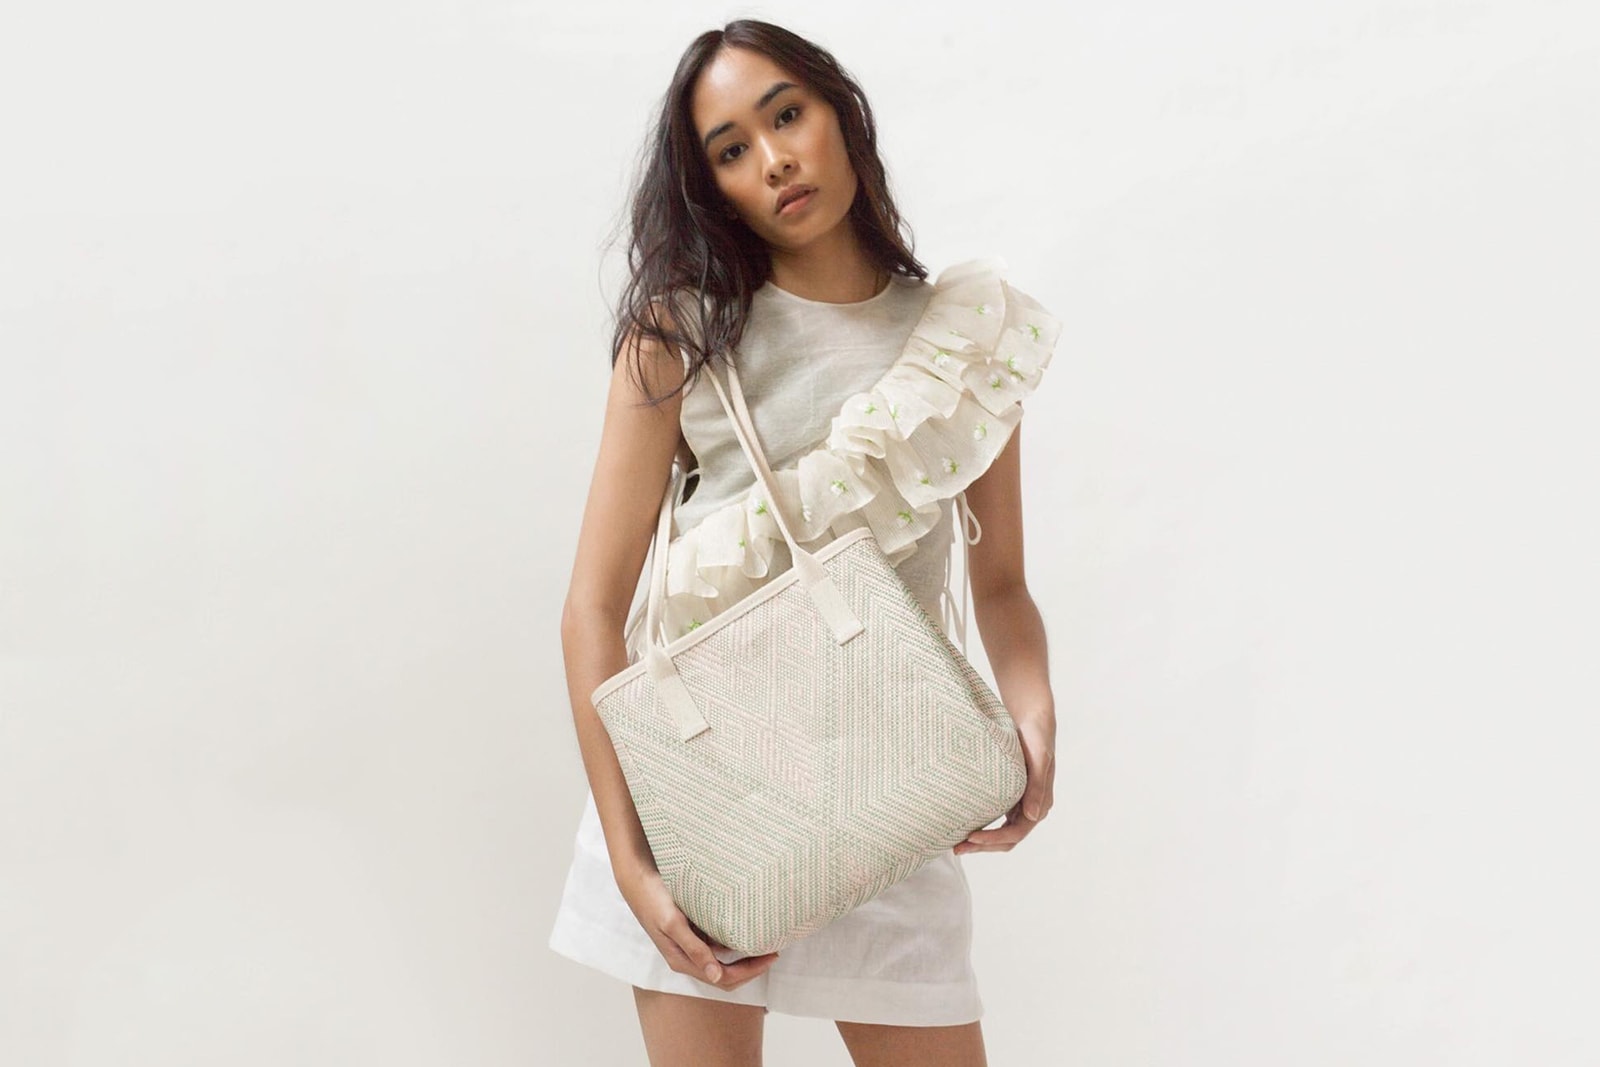 halohalo cara rocco sumabat handbags furniture homeware sustainability manila philippines designer 